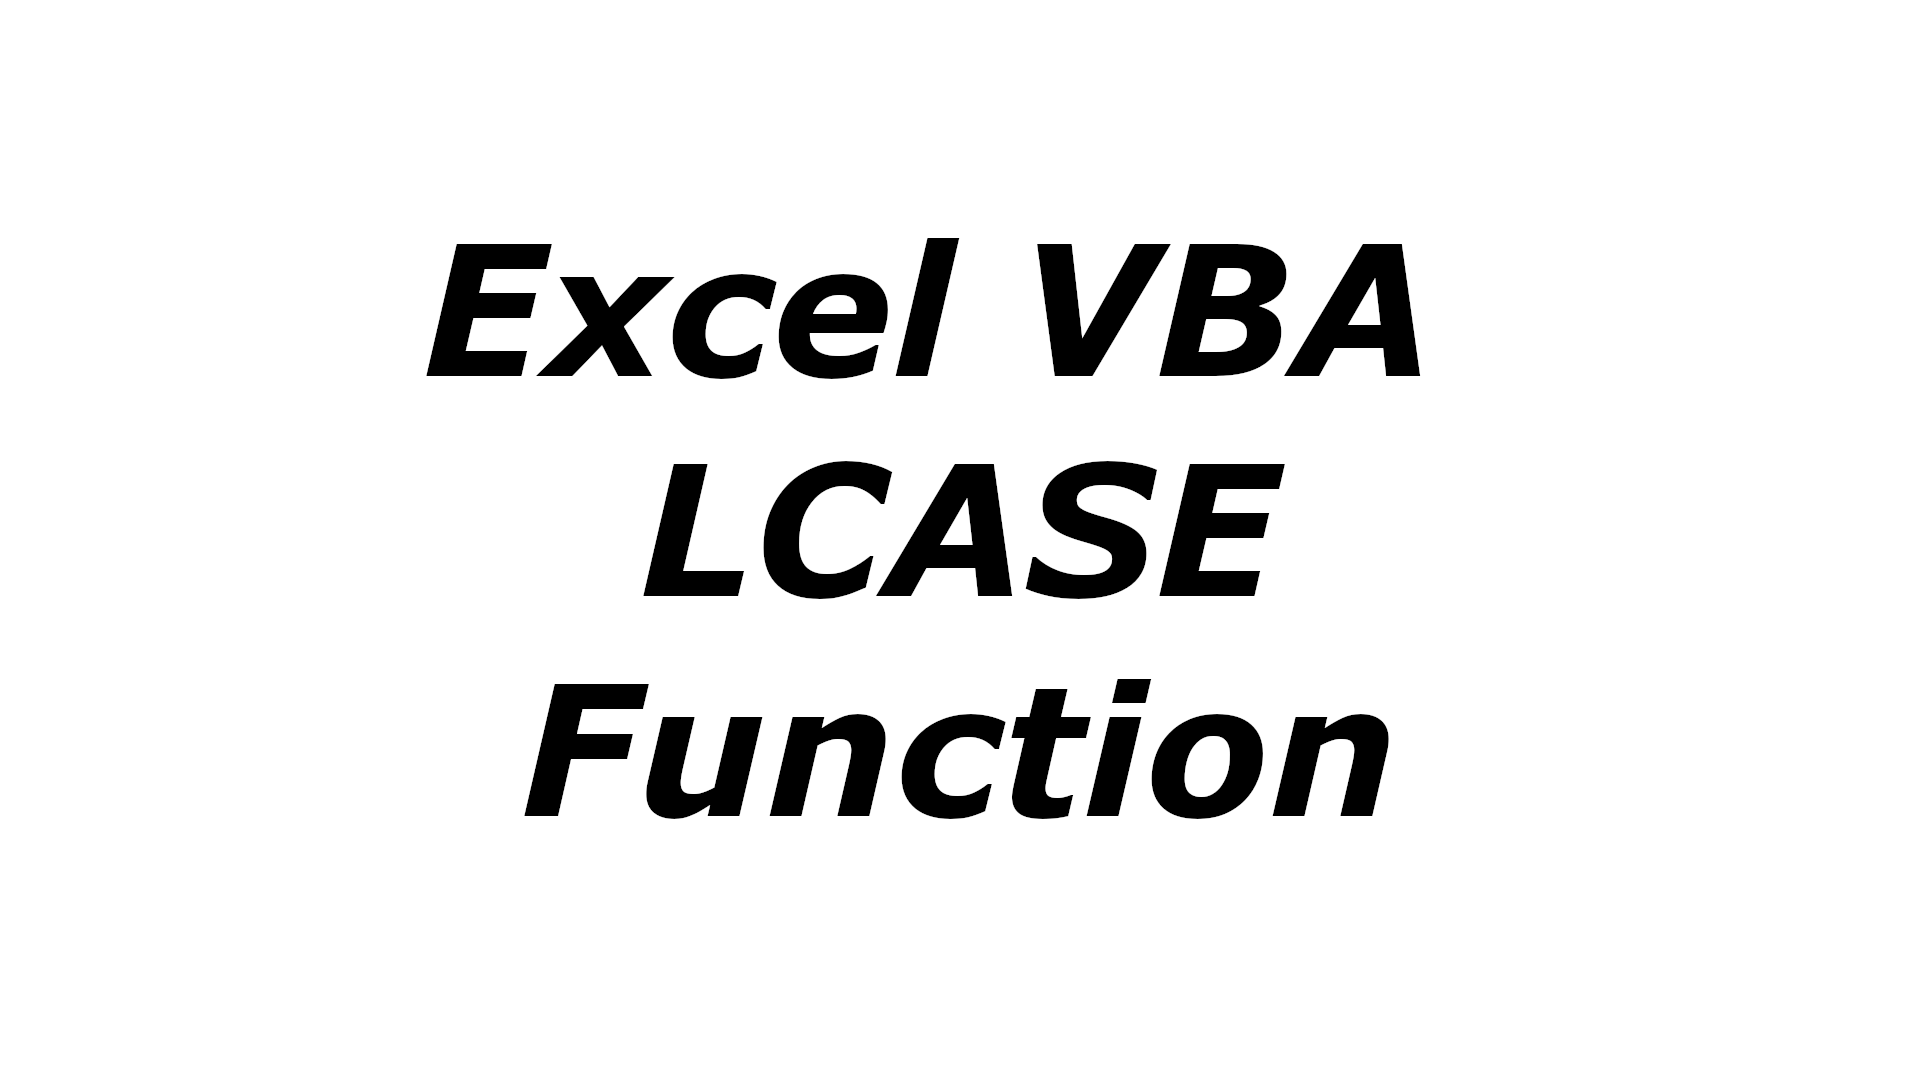 Excel VBA LCASE function